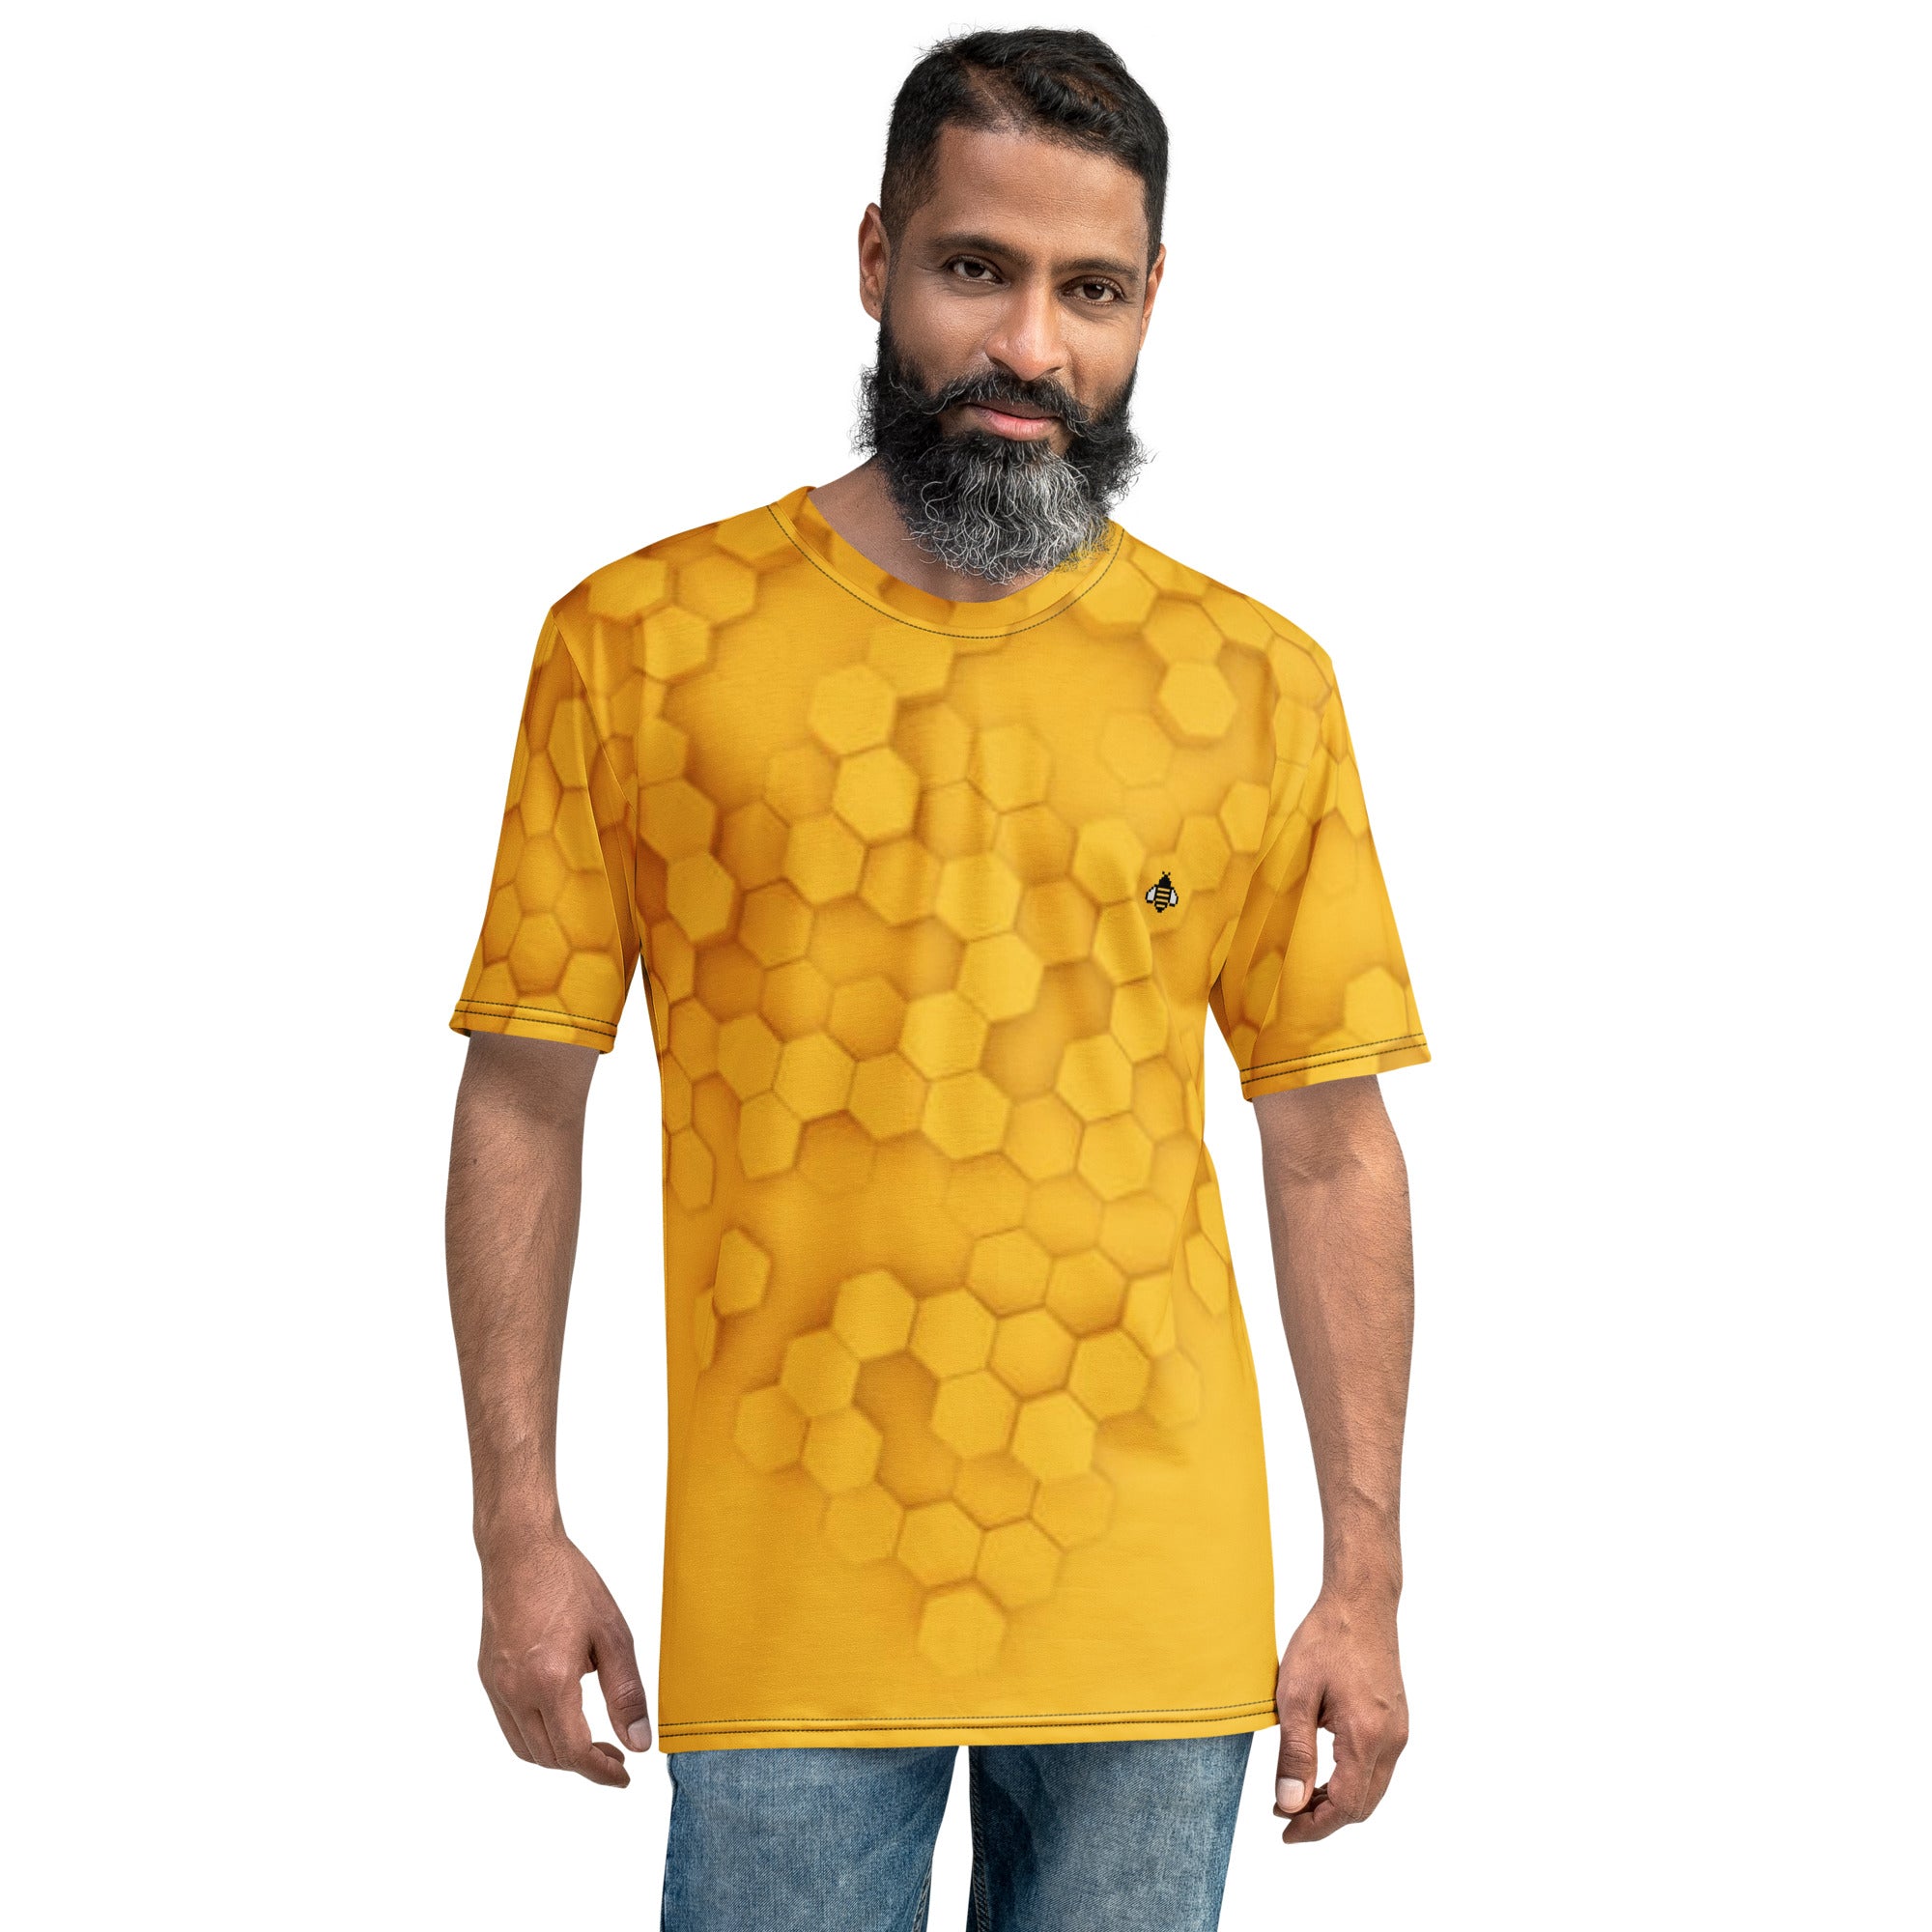 Honeycomb Men's TShirt - Front - https://ascensionemporium.net